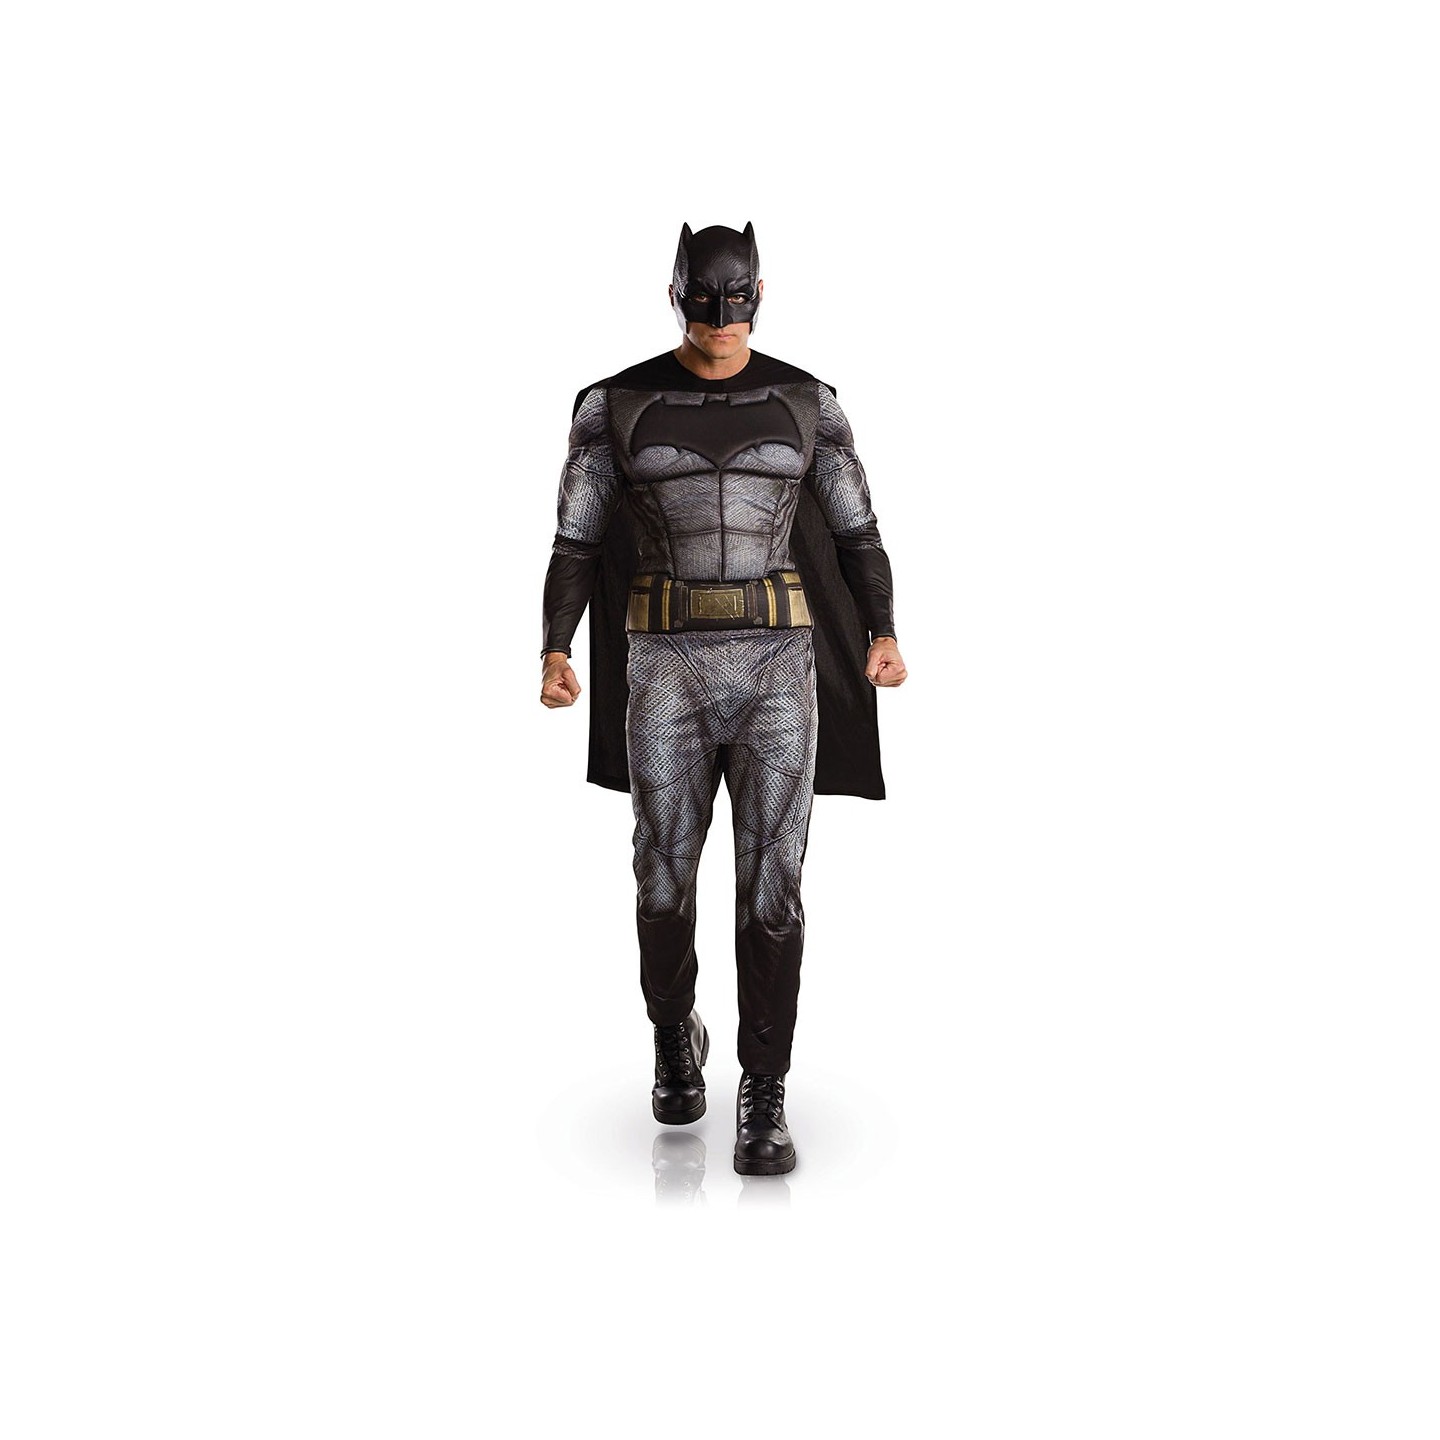 binnenkort onderdak Kalmte Batman kostuum volwassenen| Jokershop.be - Superhelden kostuums